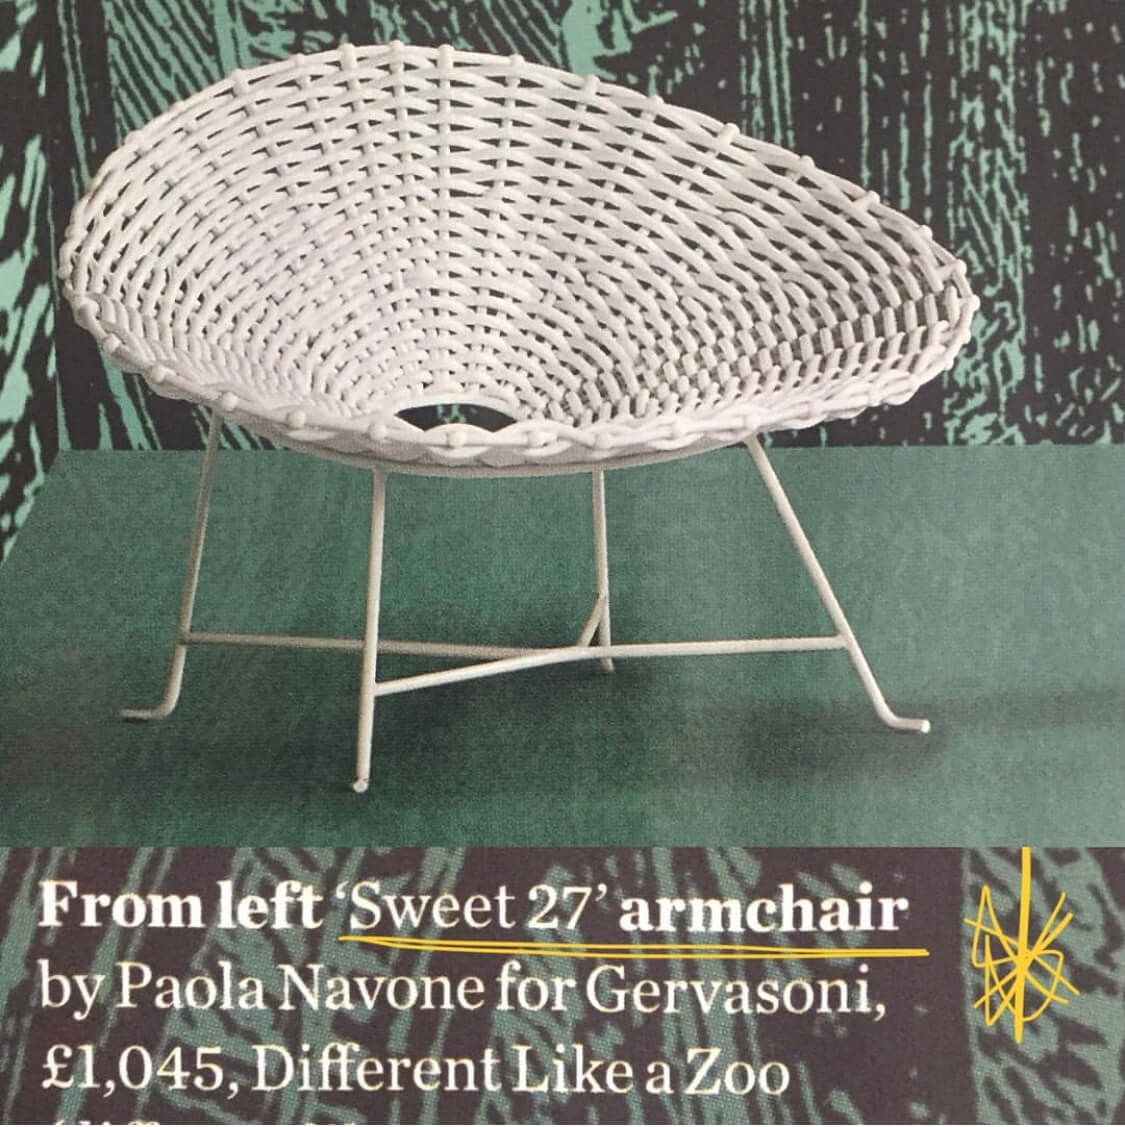 gervasoni's sweet27 armchair in elle decoration